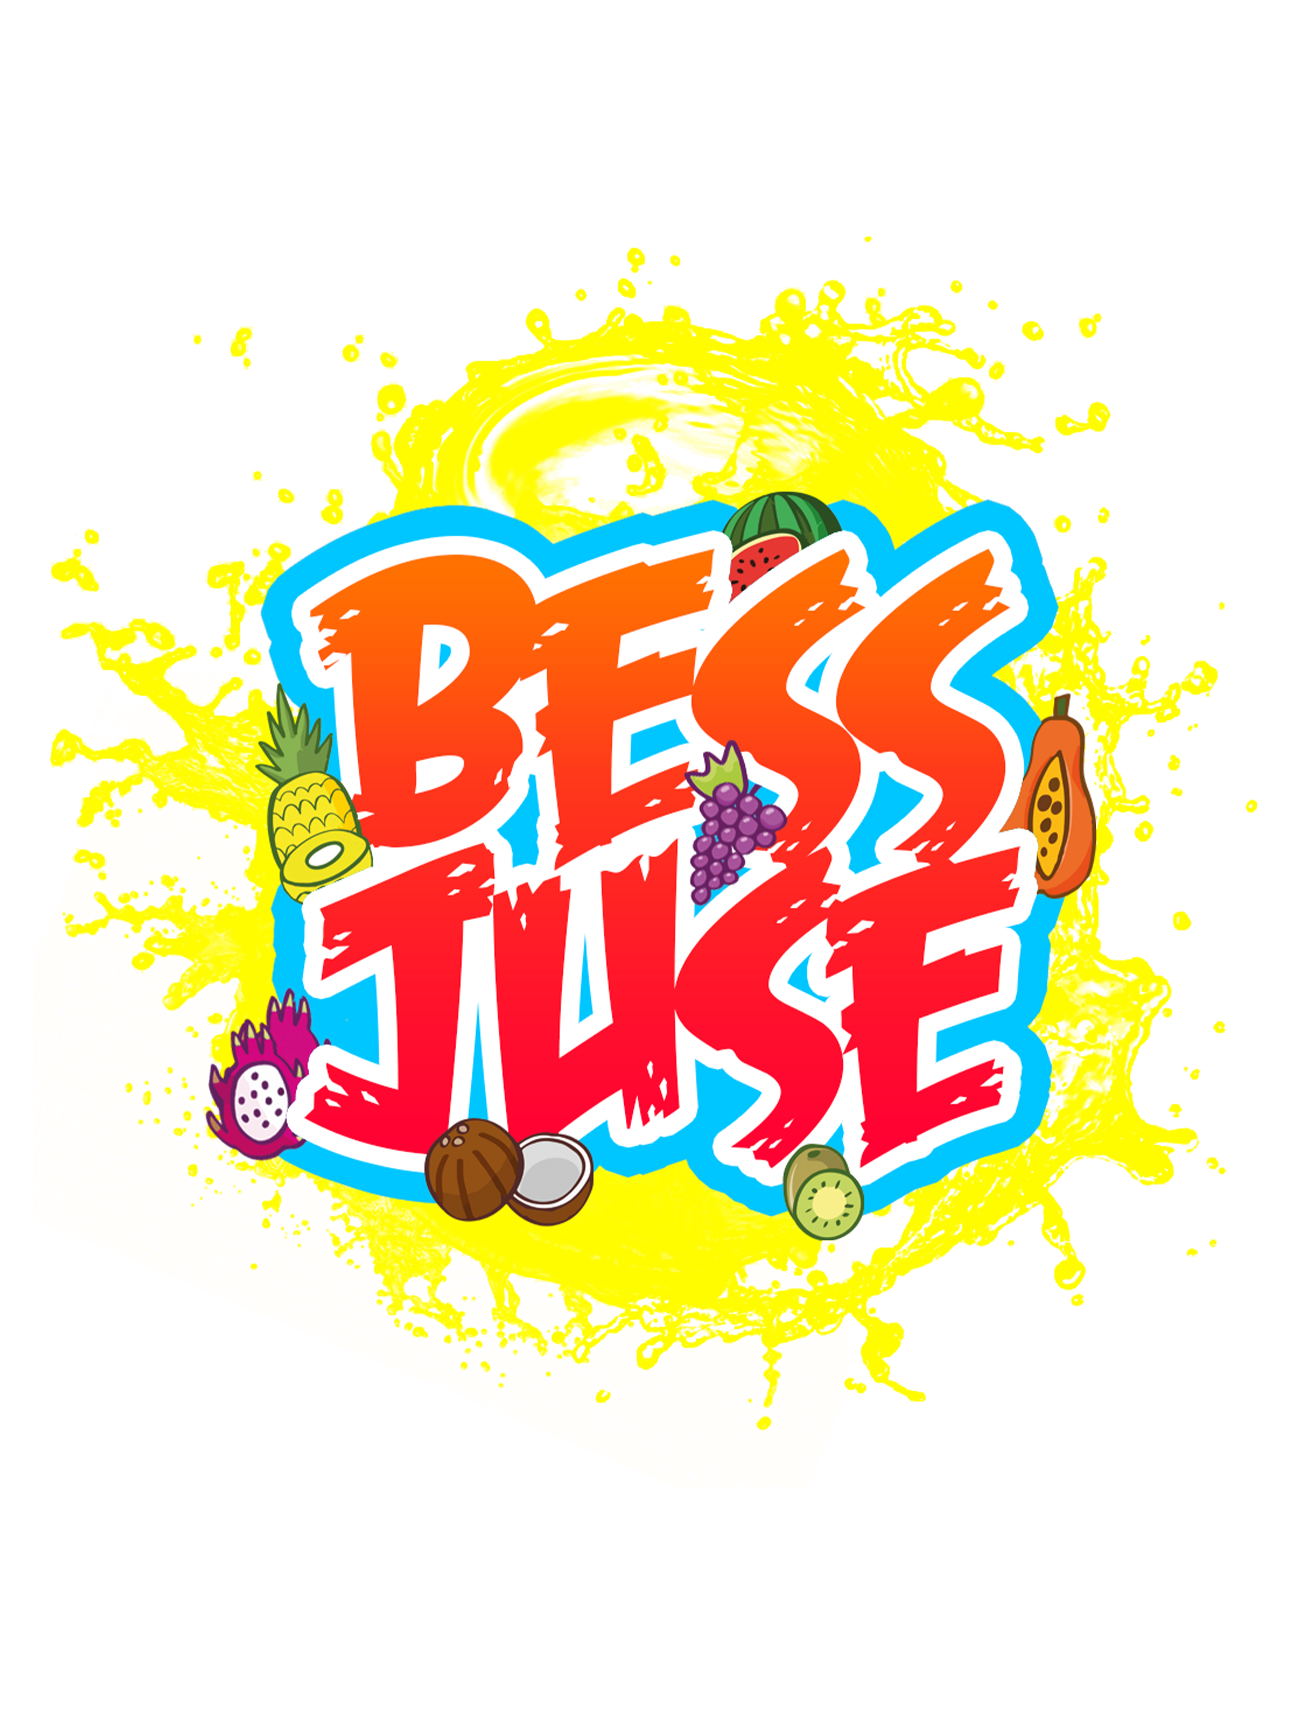 bess juse logo